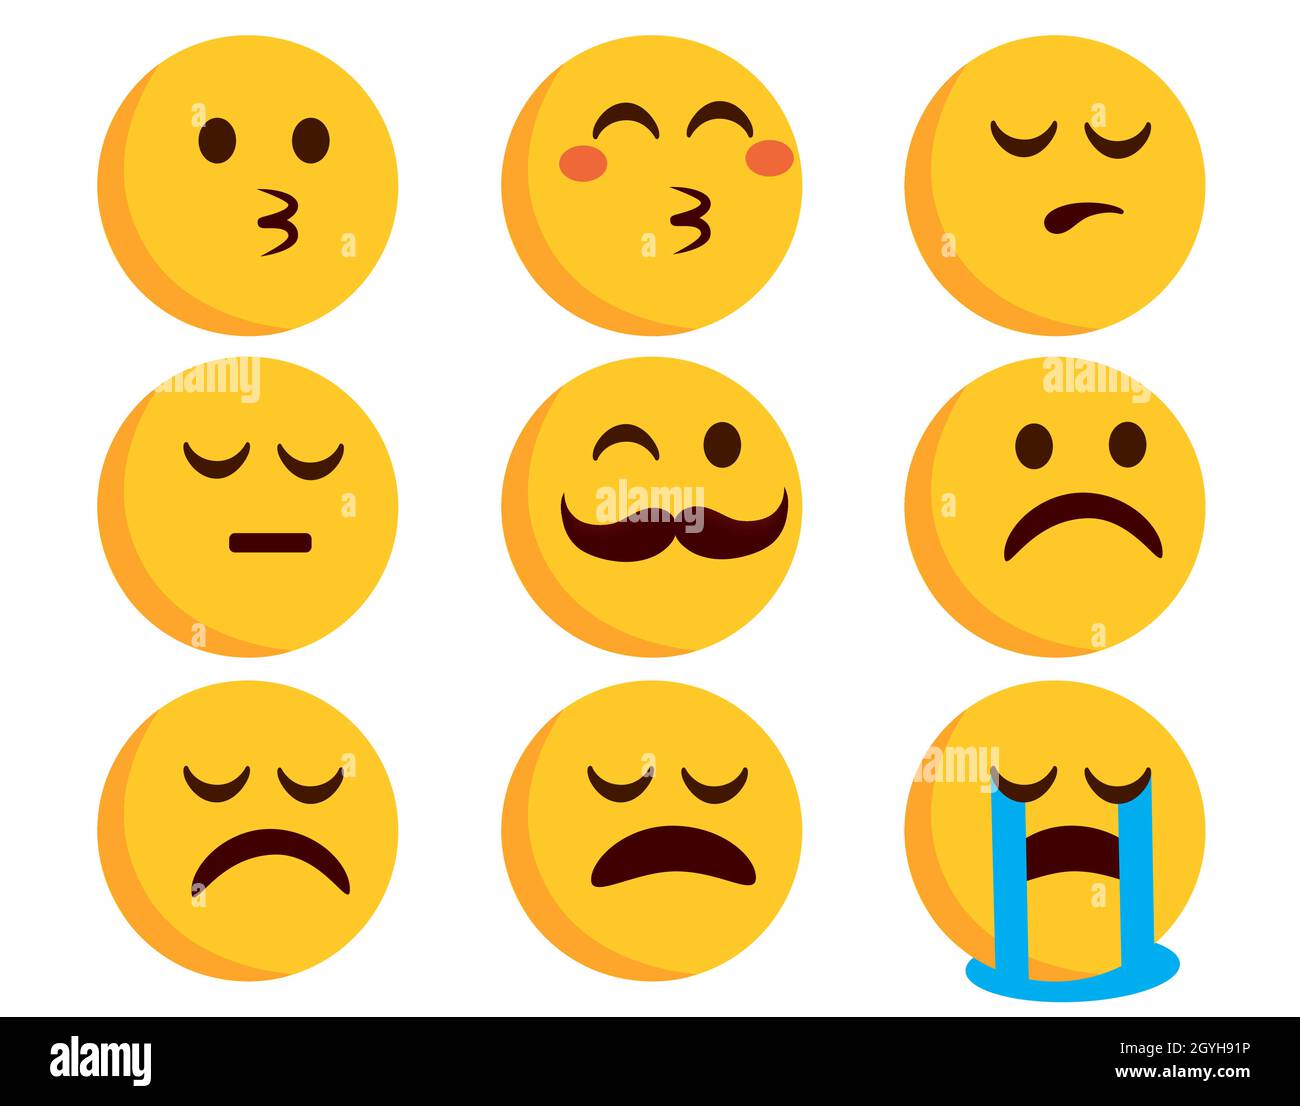 Smileys Flat Emoticon Vector Set Emoticons Smiley Characters In